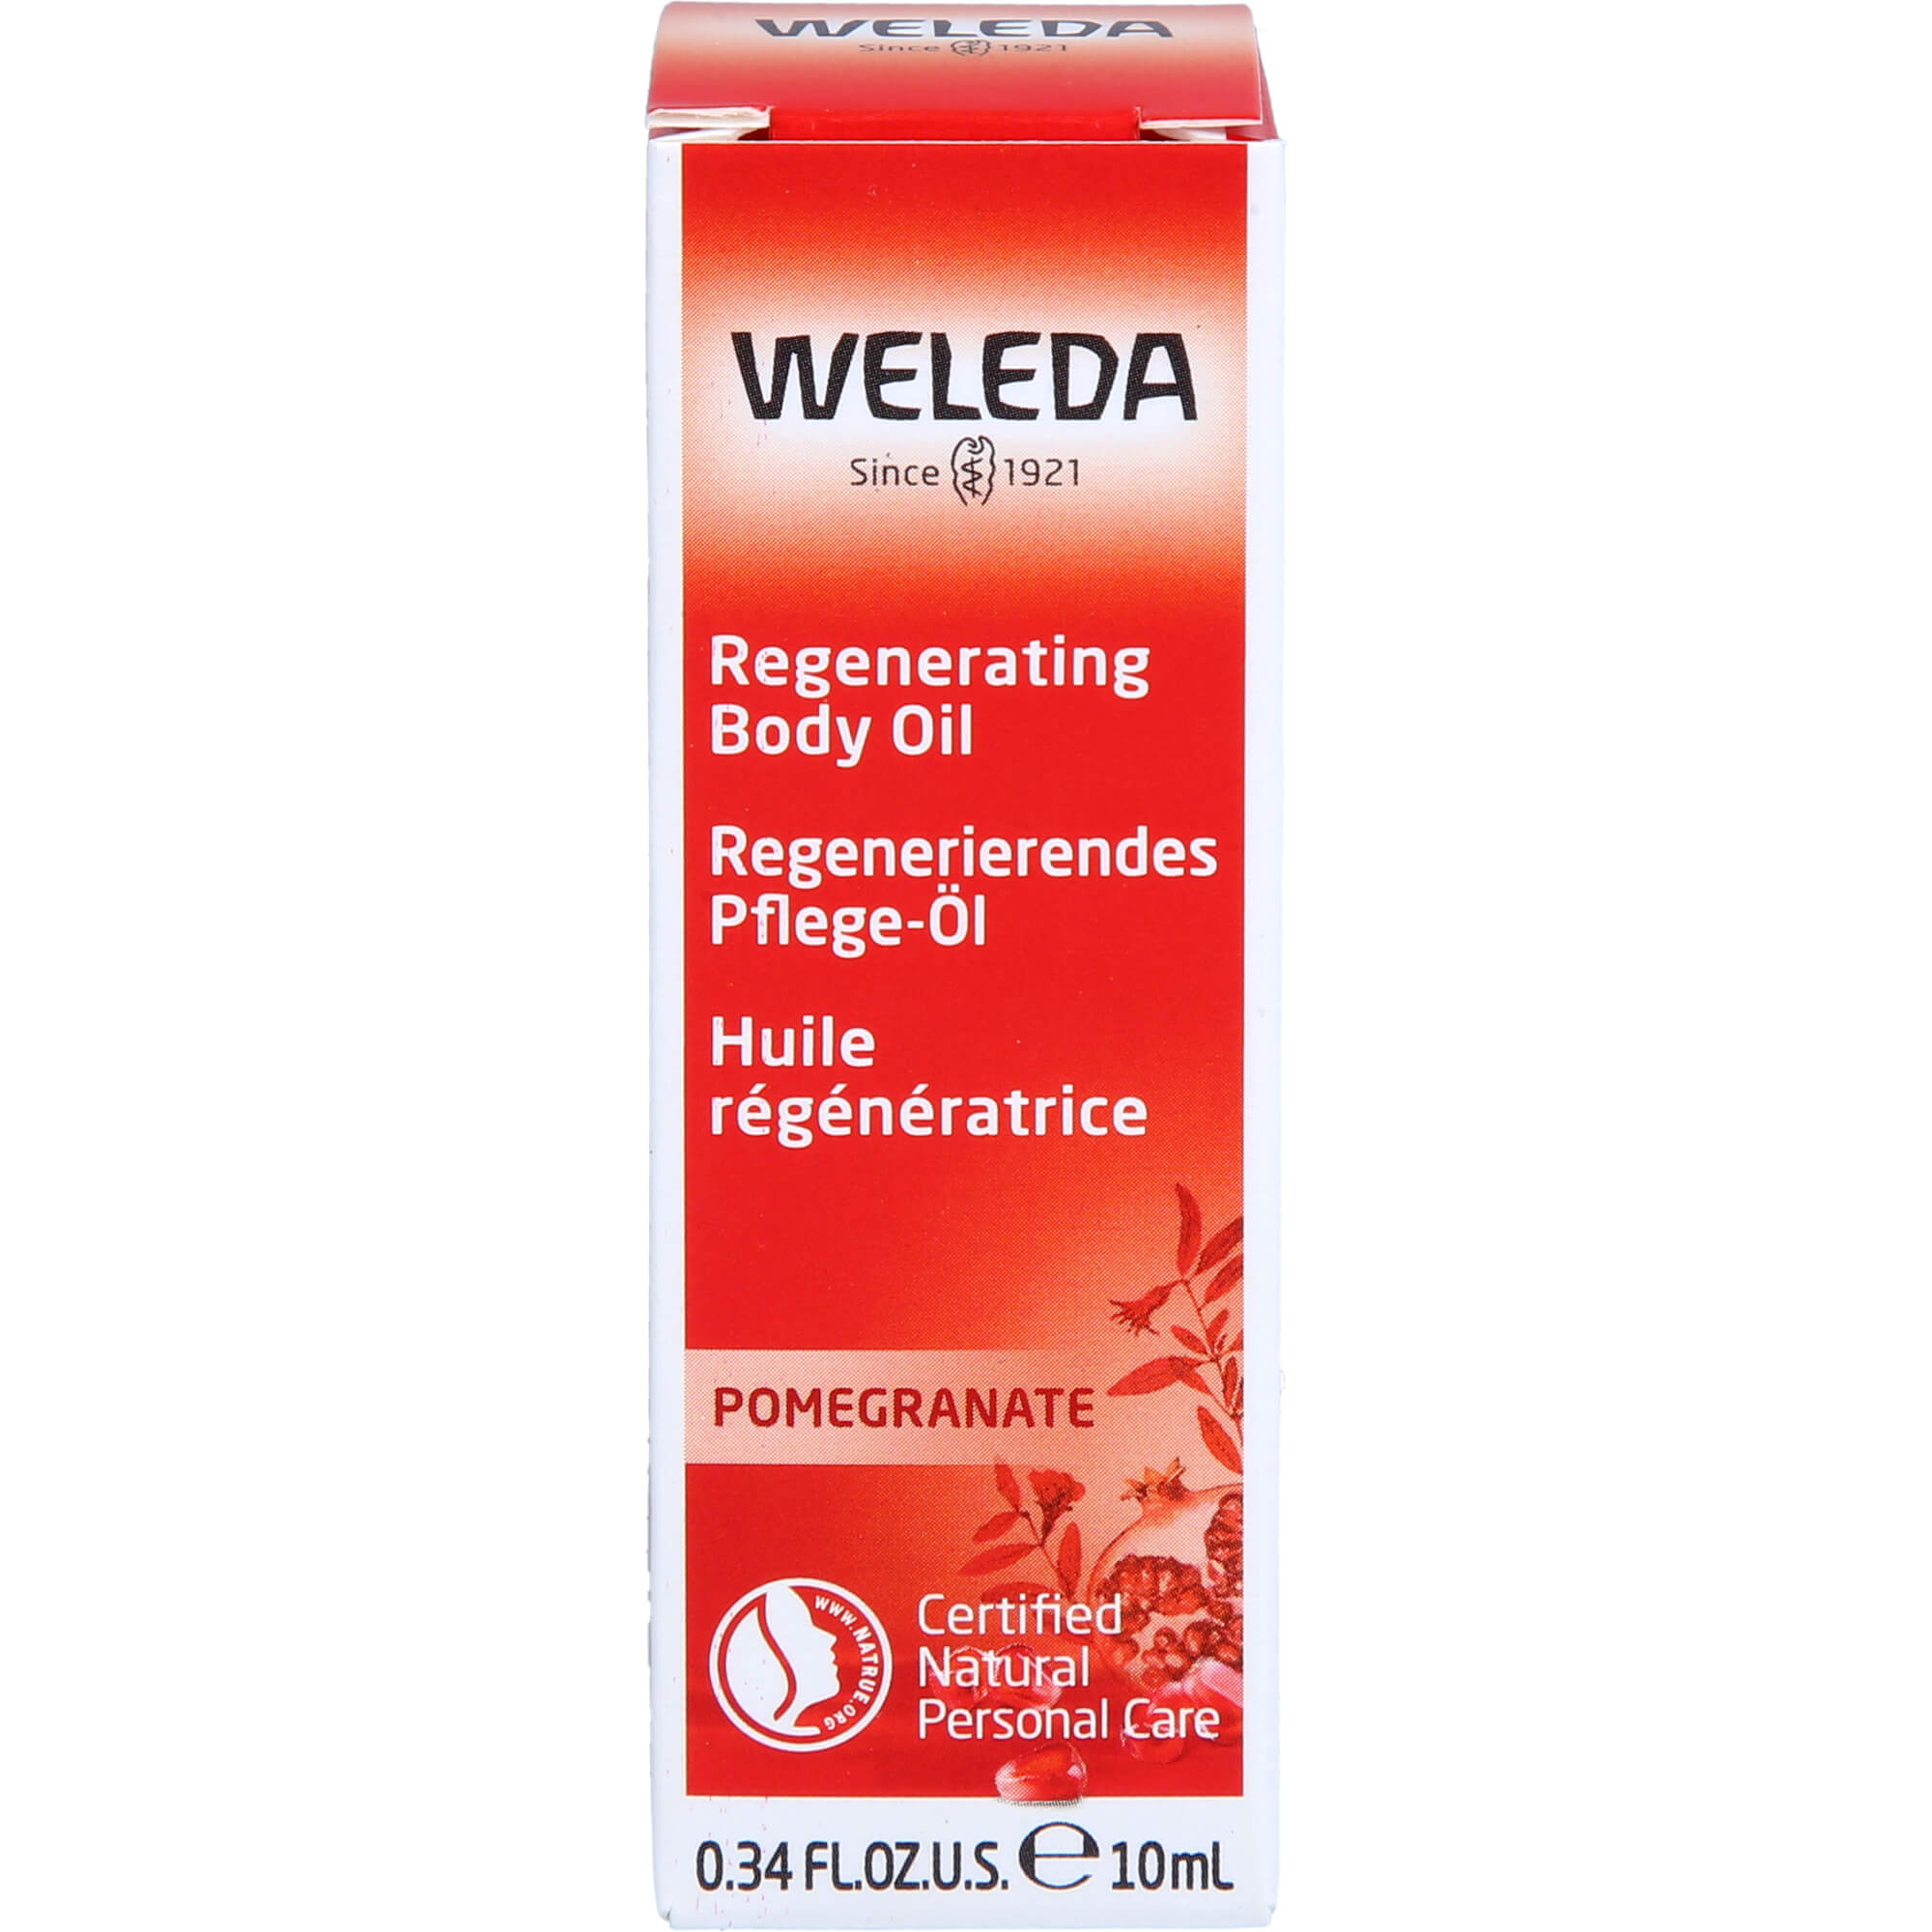 WELEDA Granatapfel regenerierendes Pflege-Öl